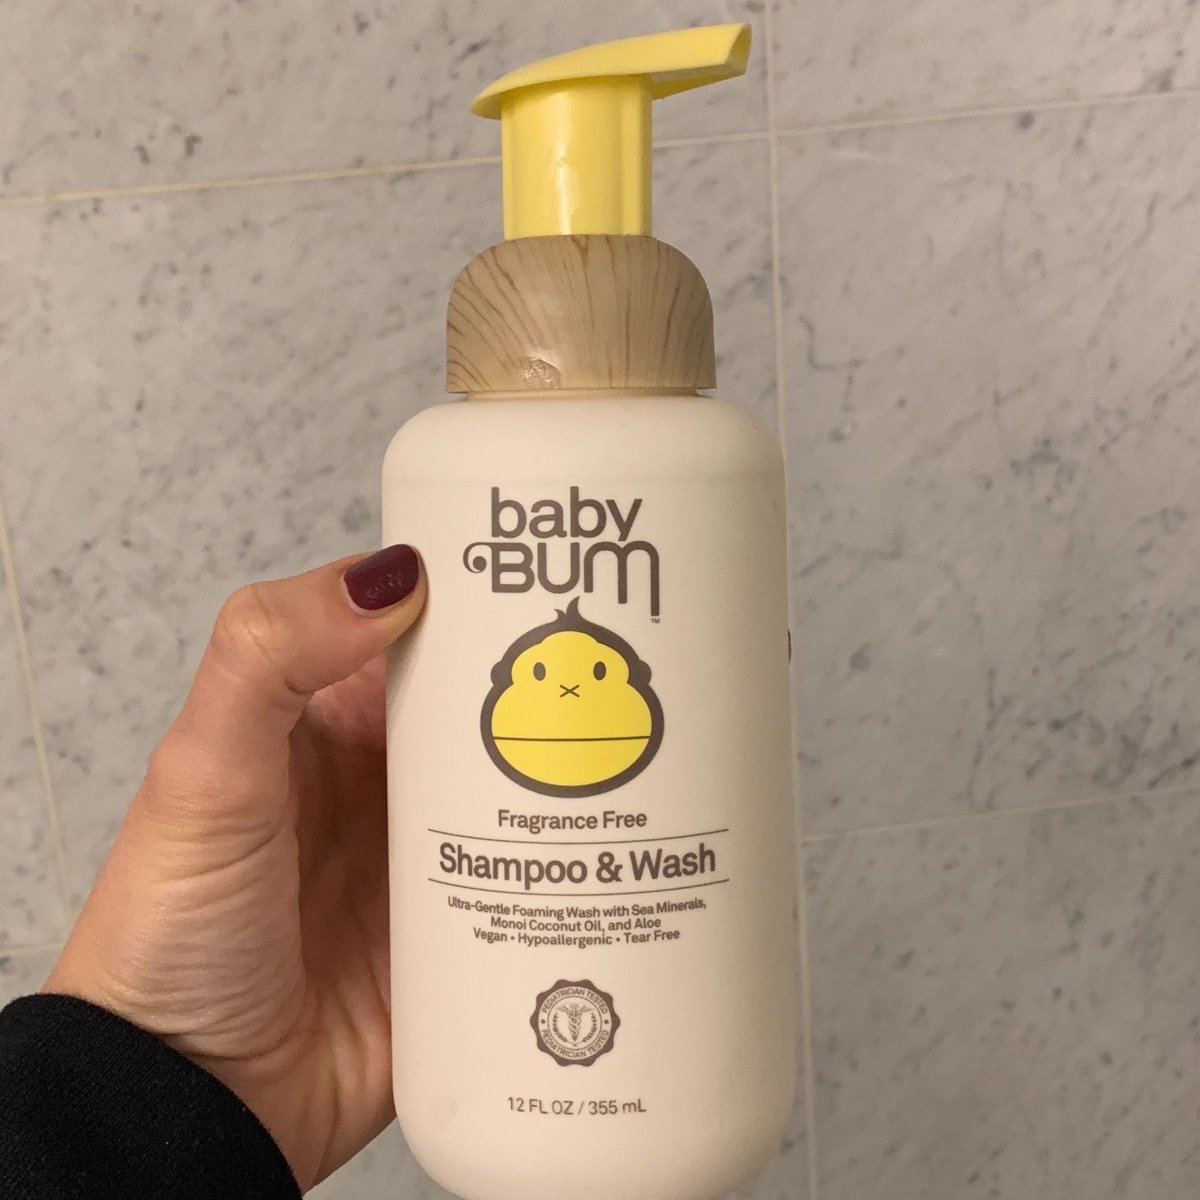 Baby Bum Shampoo & Wash Reviews